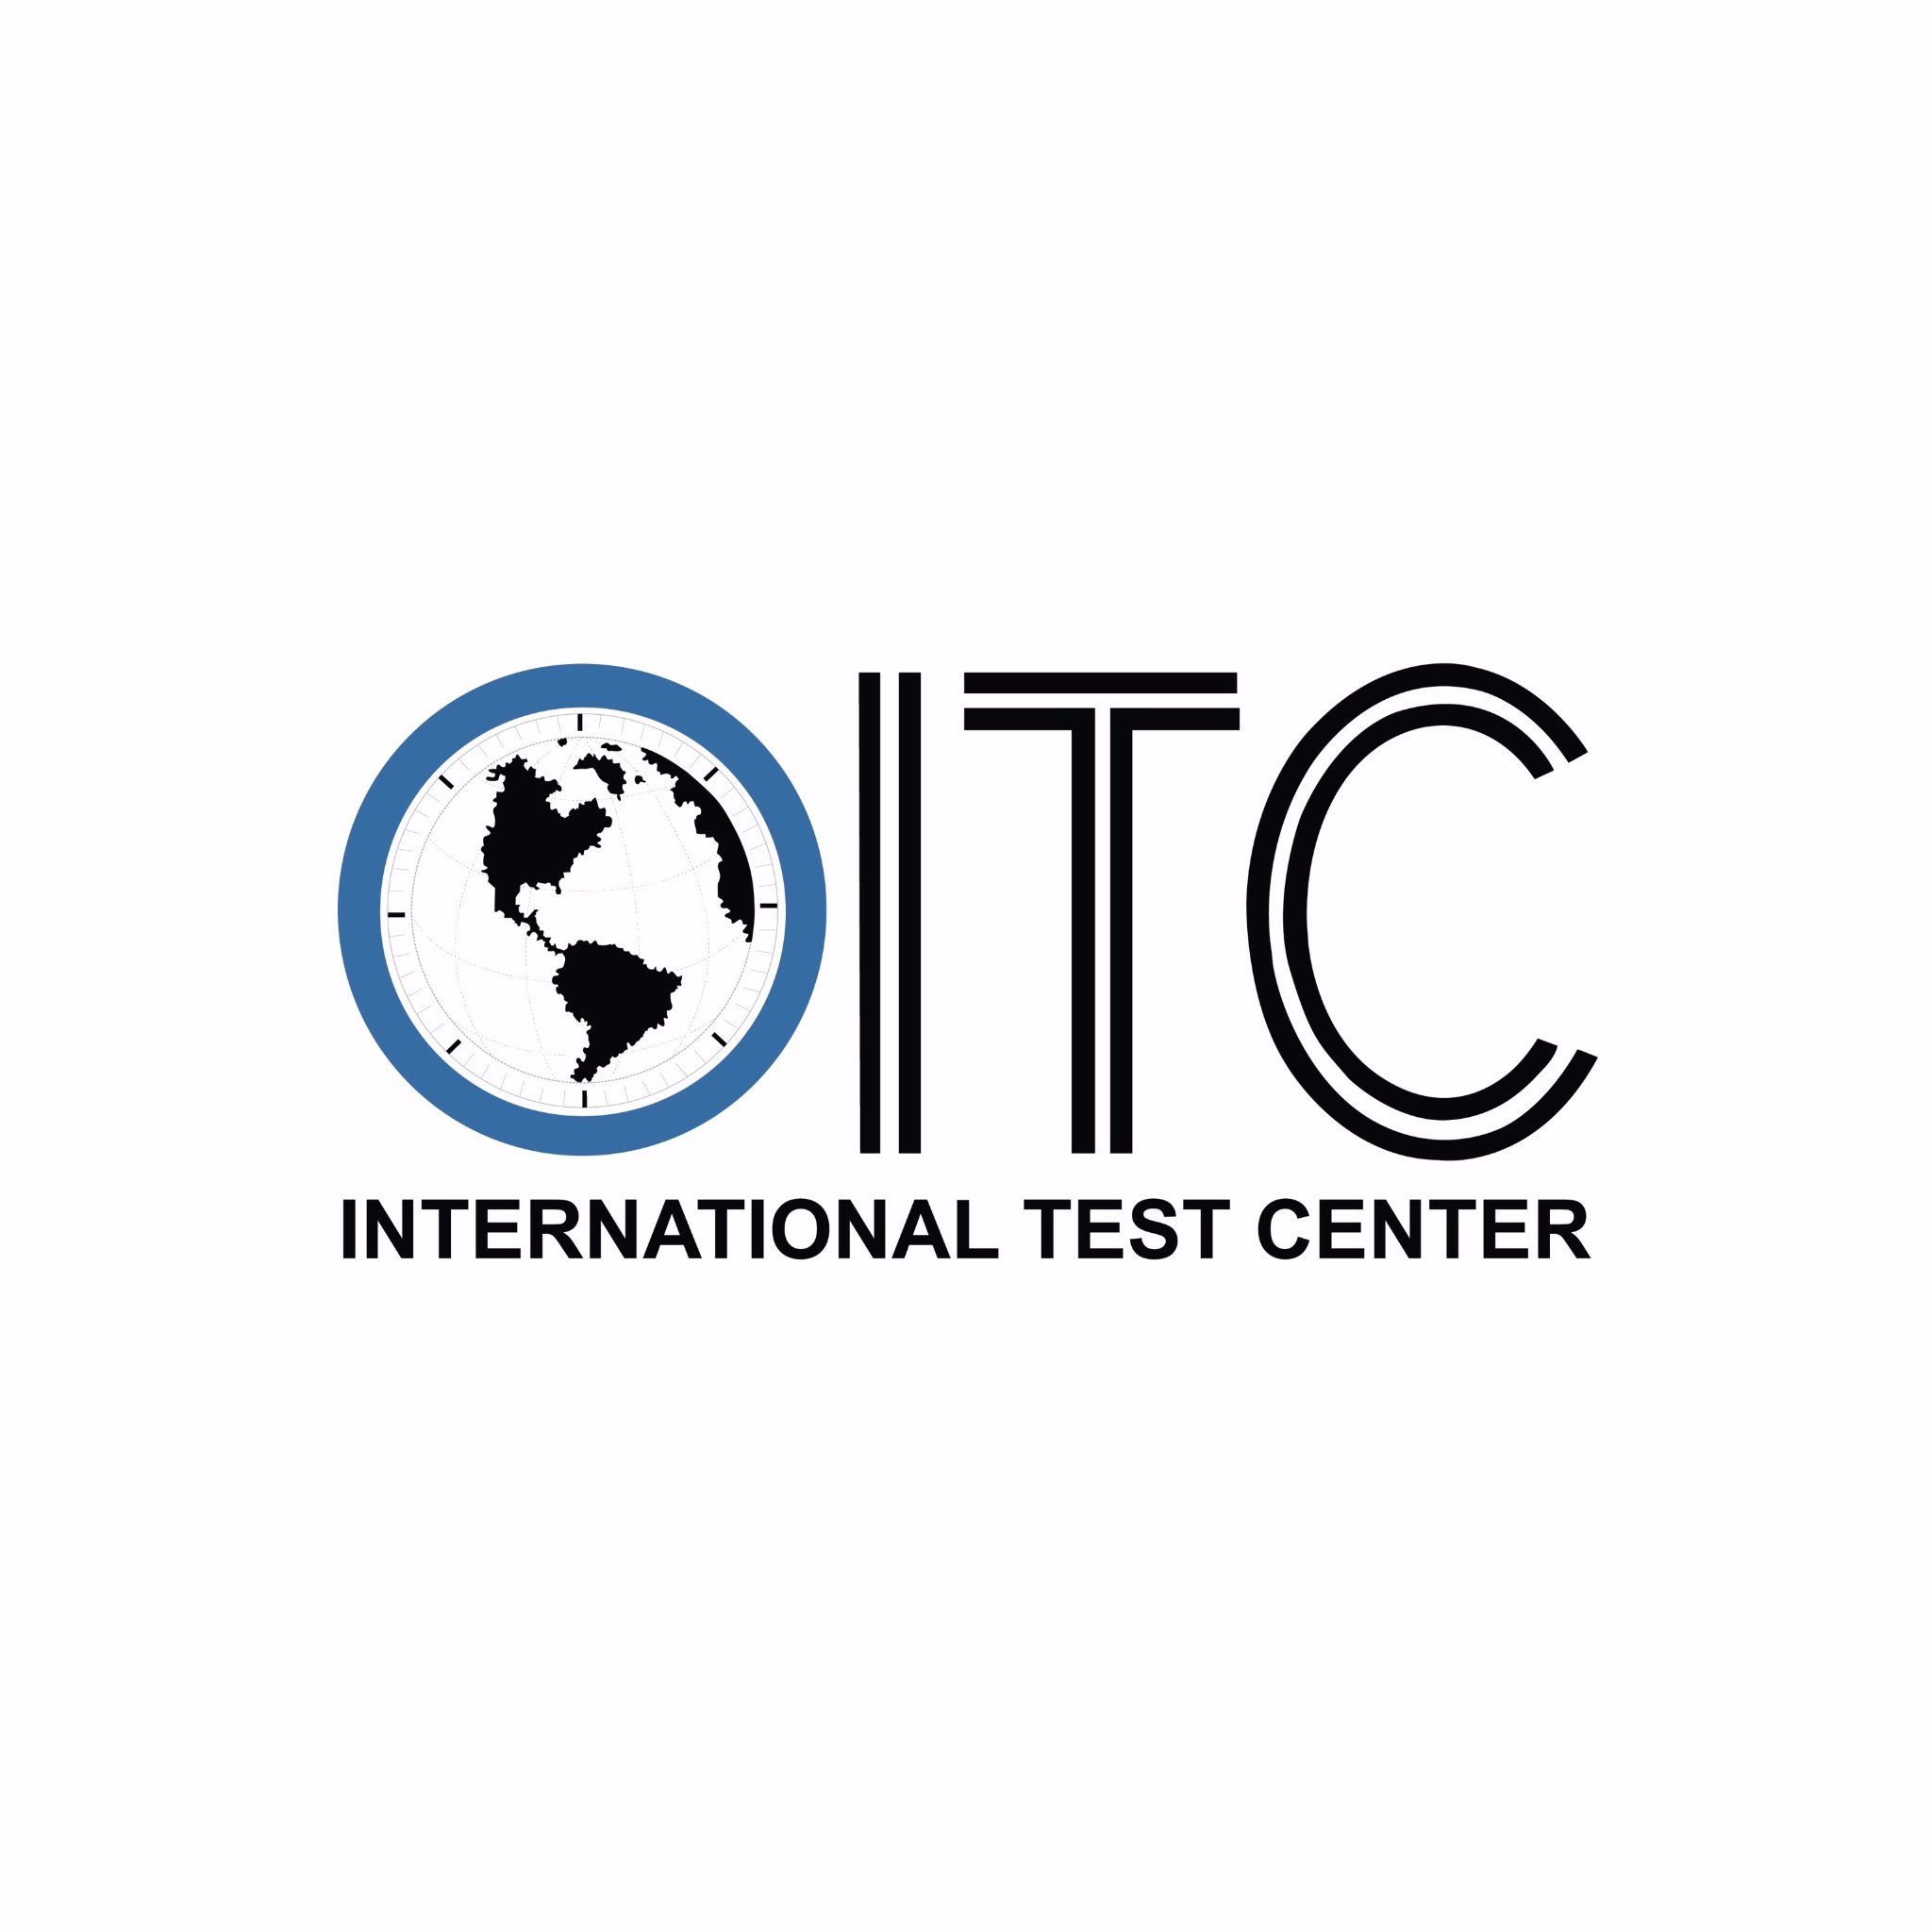 Int testing. International Test. Test Center. ITC. ITC Officina.